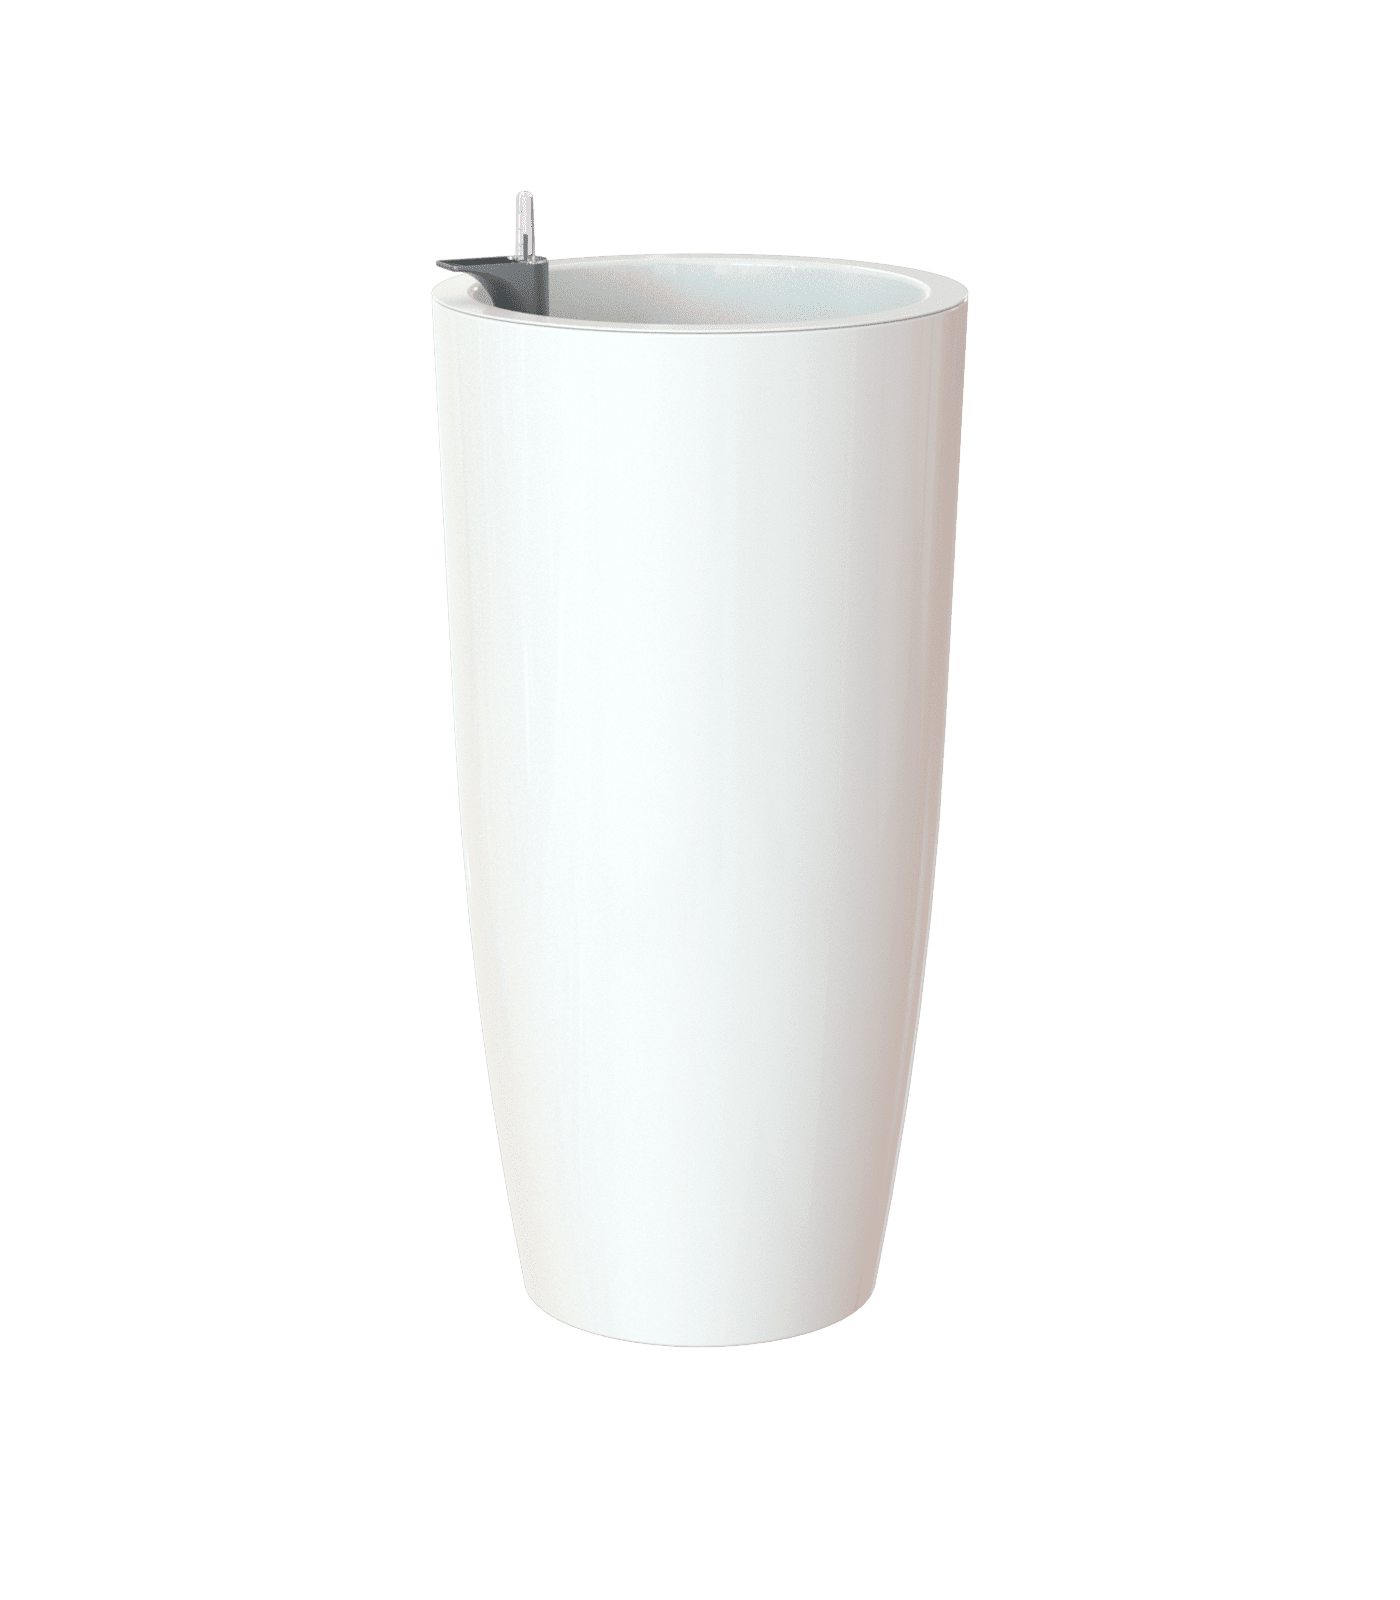  vaso santorini | sistema de auto-irrigação